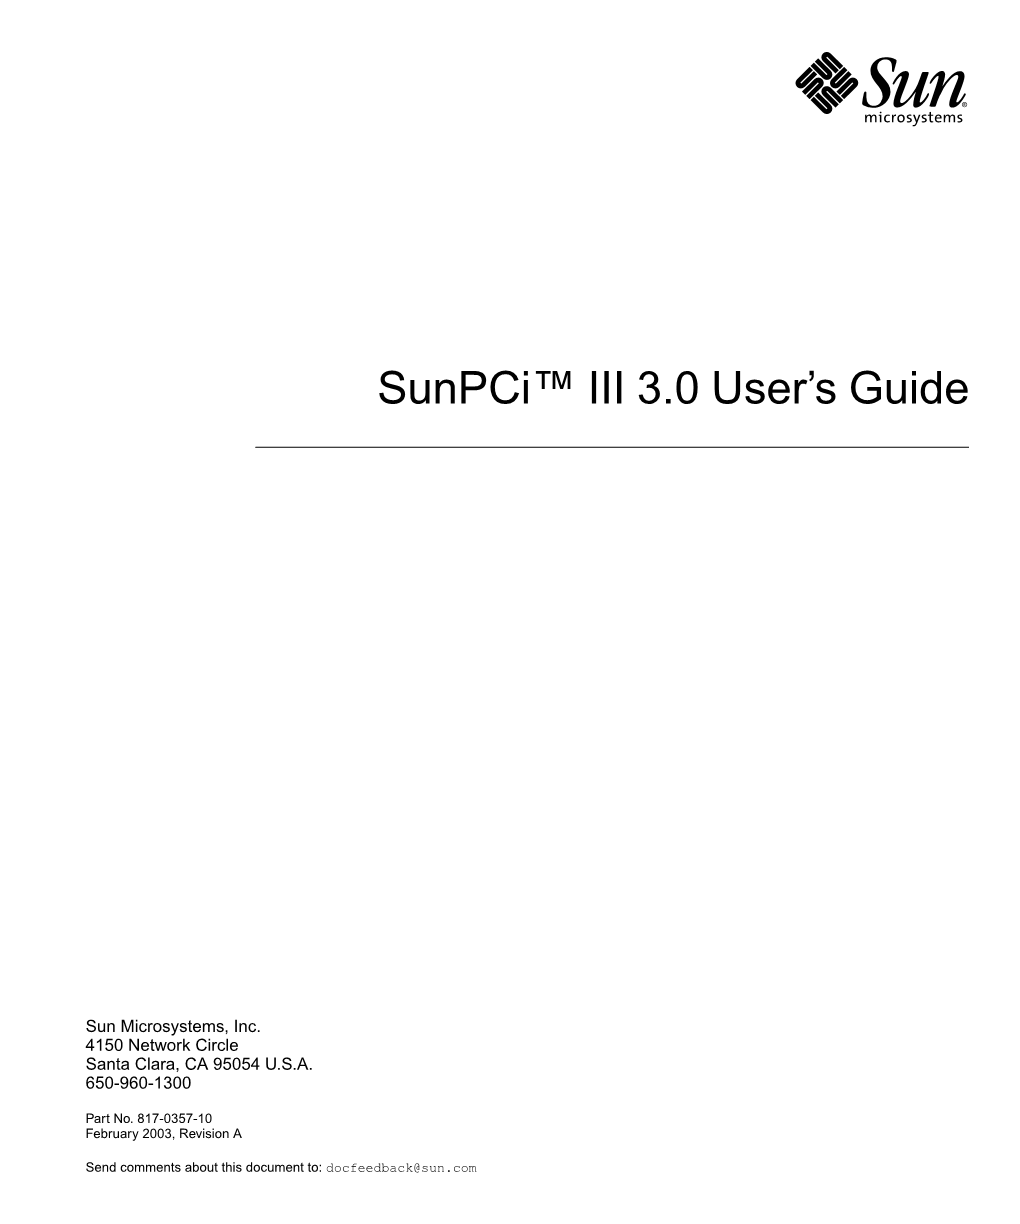 Sunpci III 3.0 User's Guide